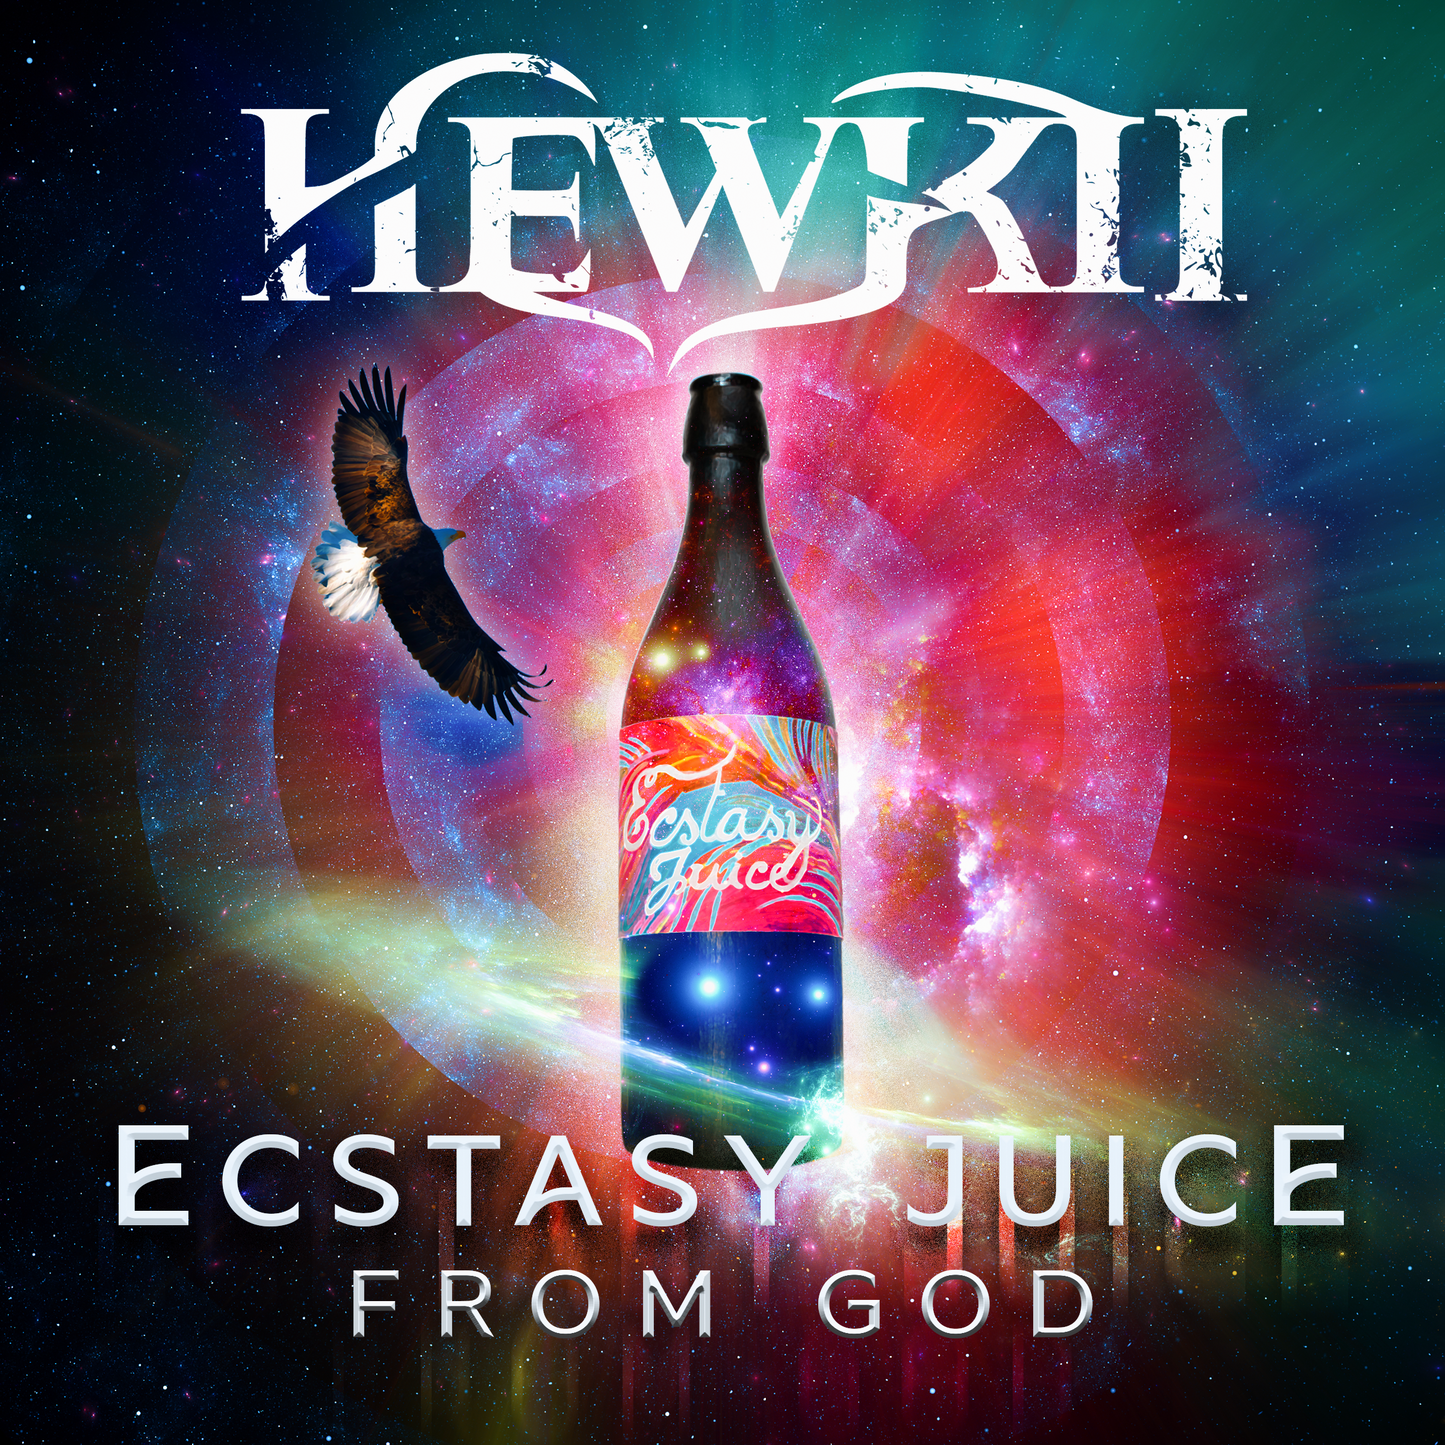 Hewkii - Ecstasy Juice from God LP